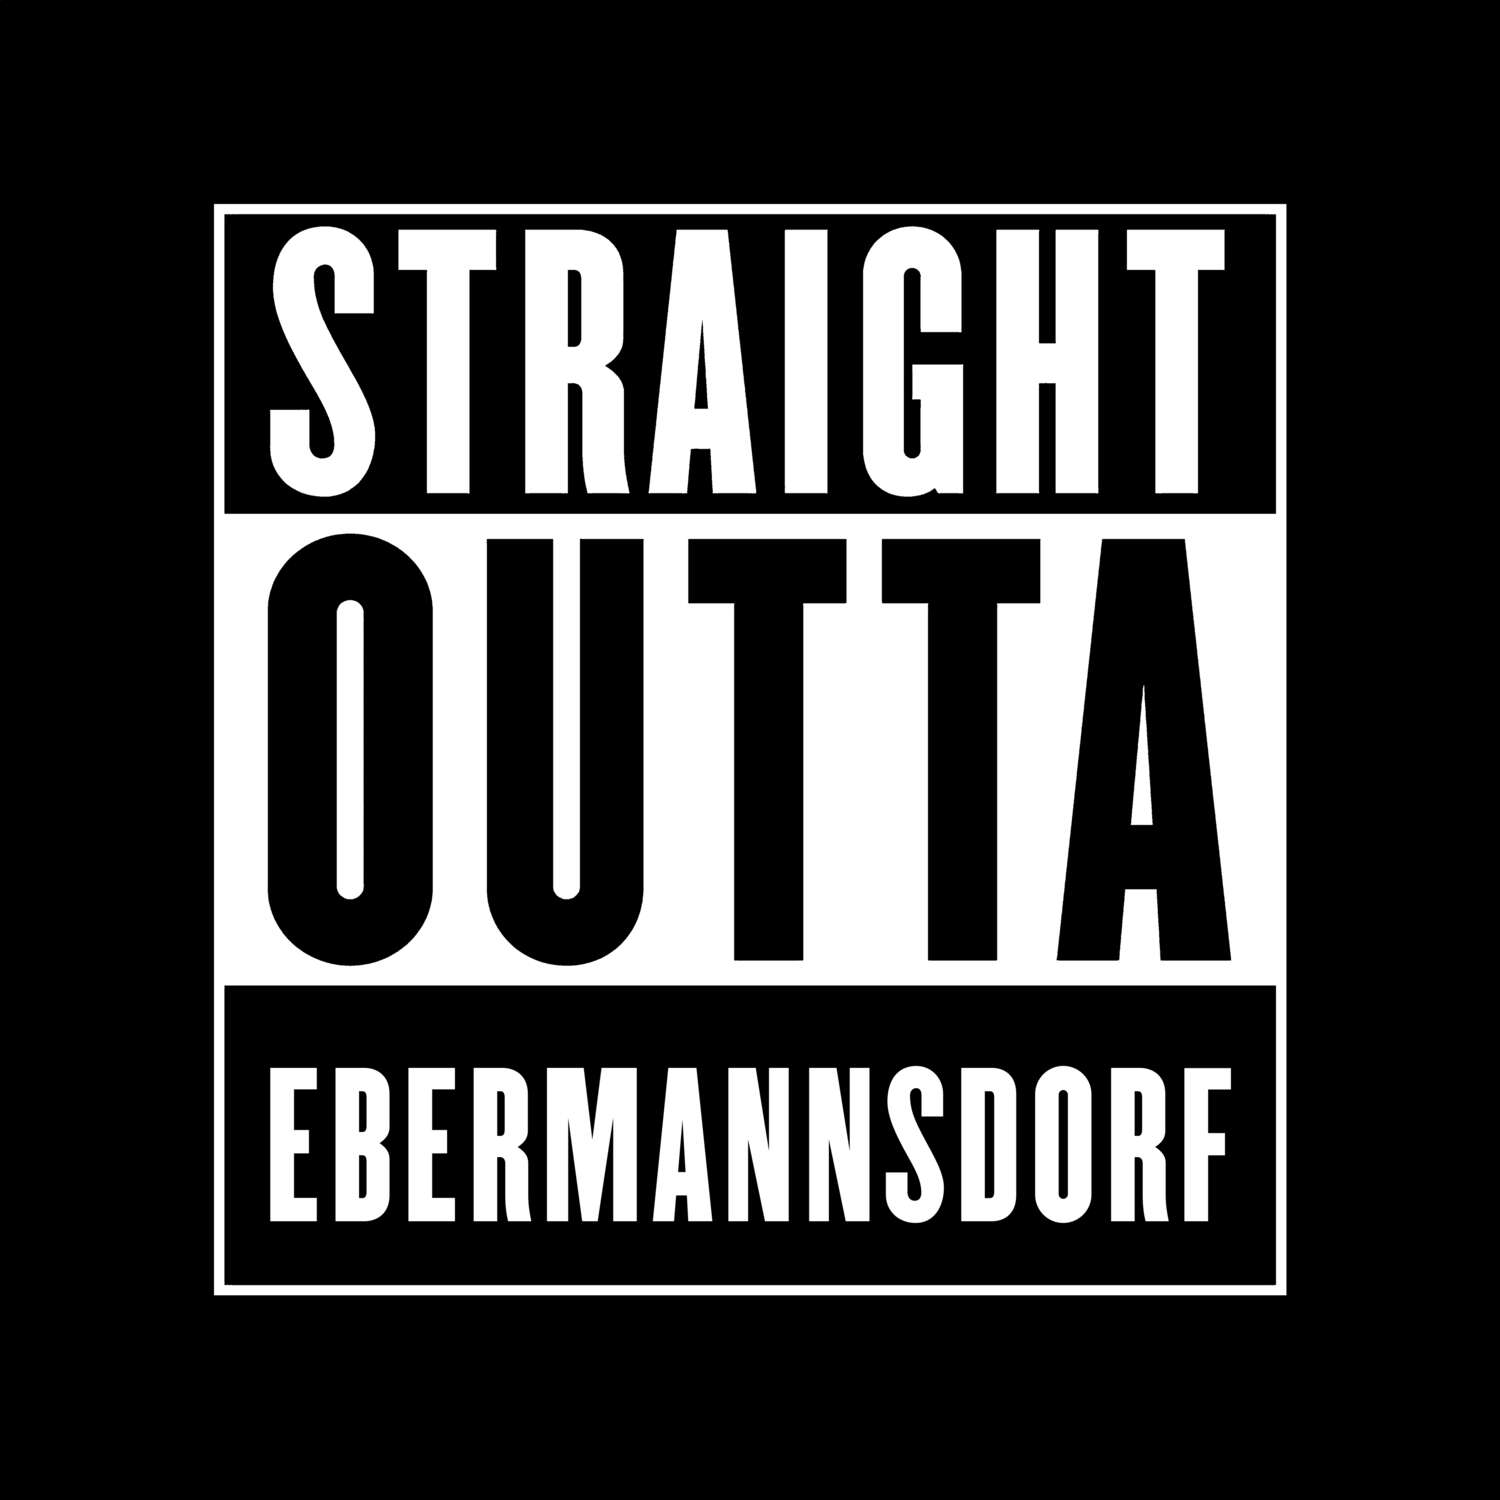 Ebermannsdorf T-Shirt »Straight Outta«